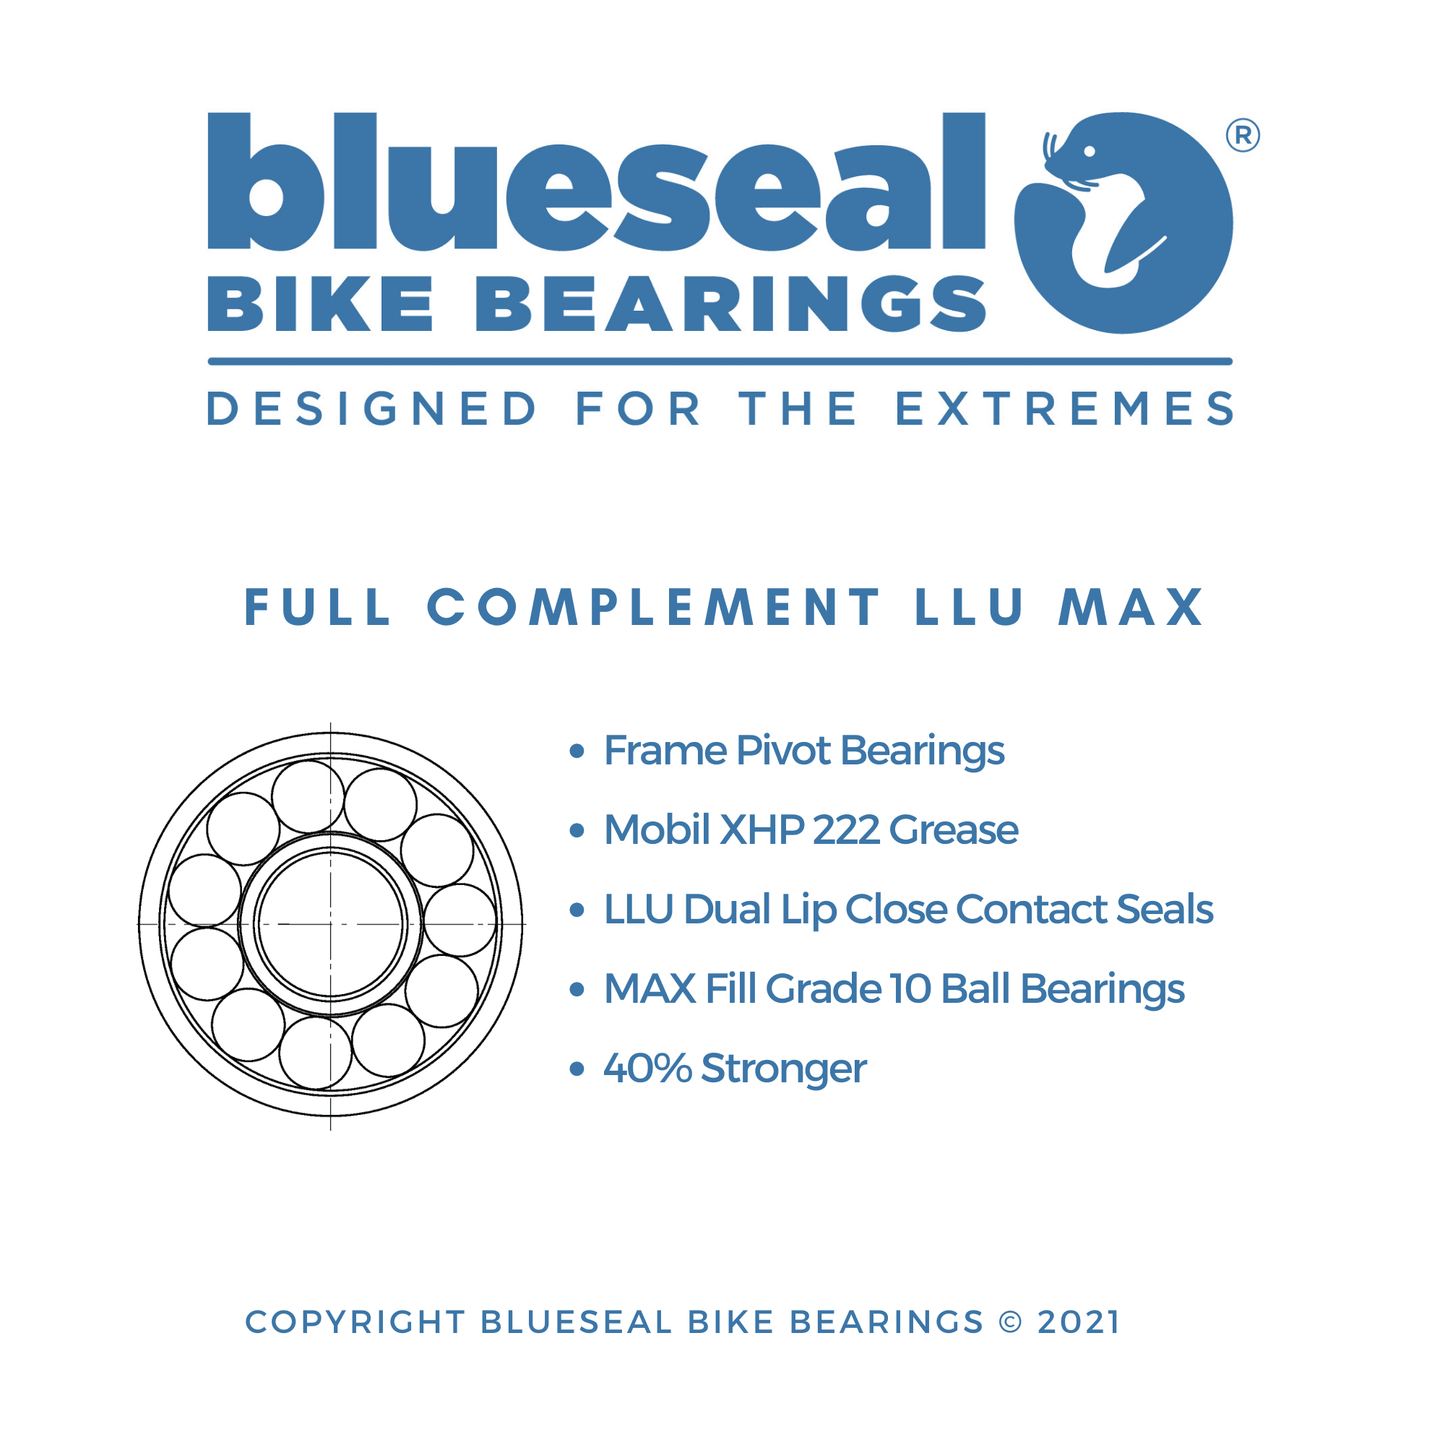 6901 LLU MAX 12 x 24 x 6mm ABEC 3 Bearing - Blueseal Bike Bearings™ - Trailvision - Mountain & Road Bike Bearings- Blueseal Bike Bearings™